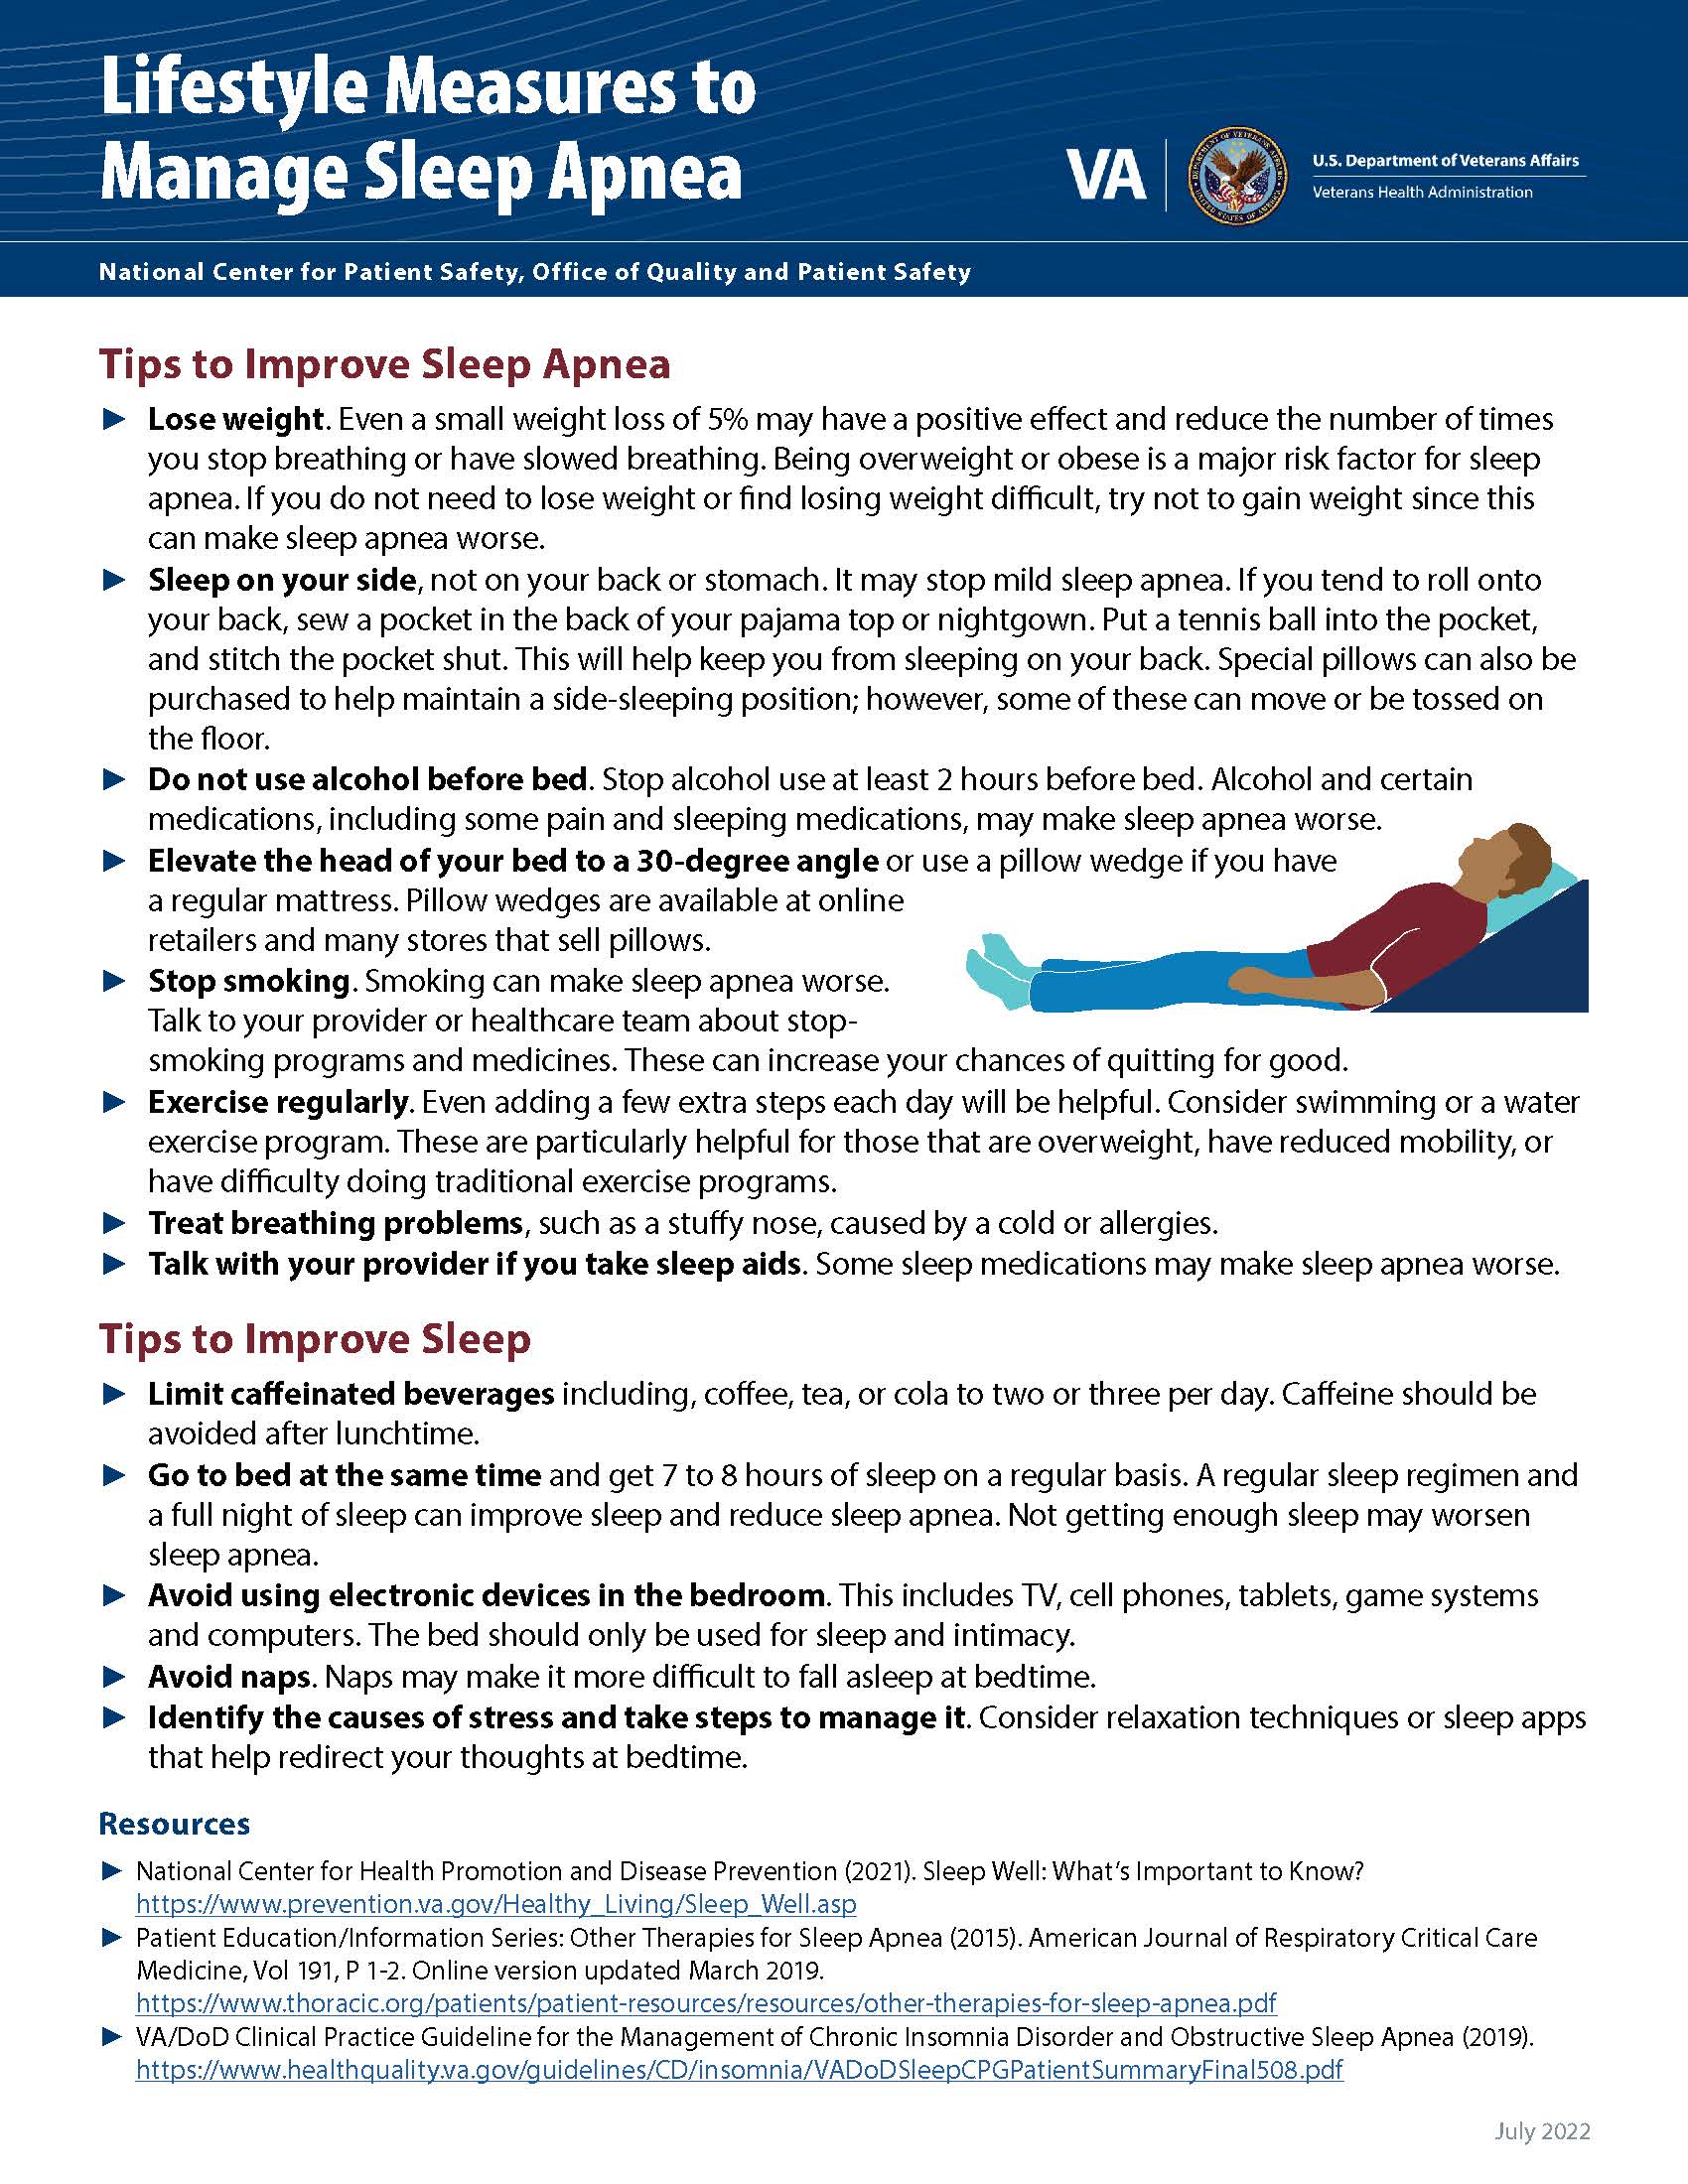 Image of Lifestyle Measures to Manage Sleep Apnea fact sheet